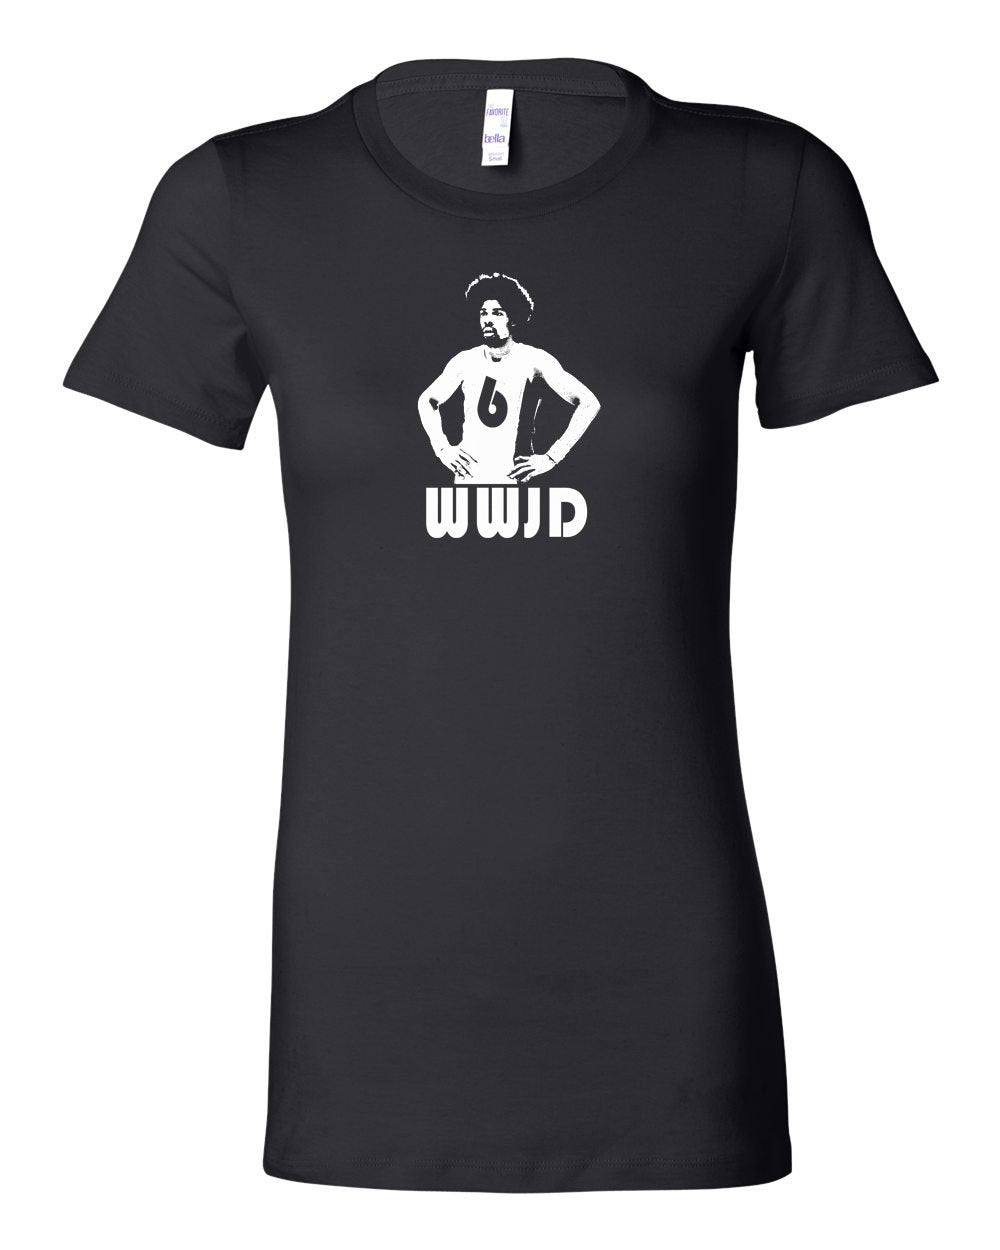 WWJD LADIES Junior-Fit T-Shirt